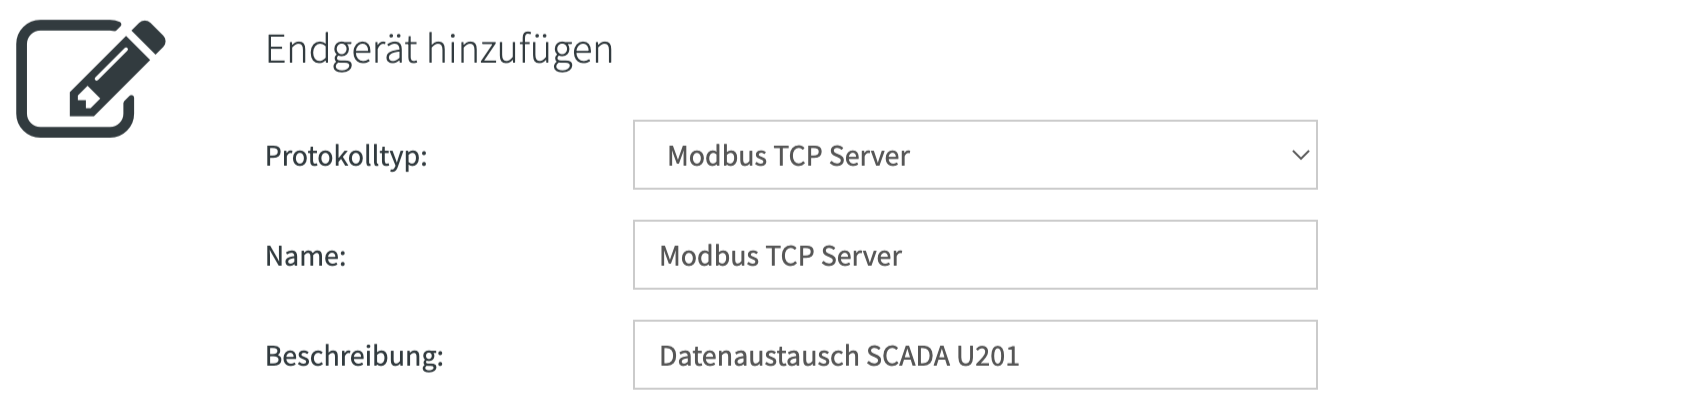 services-serc-device-modbustcp